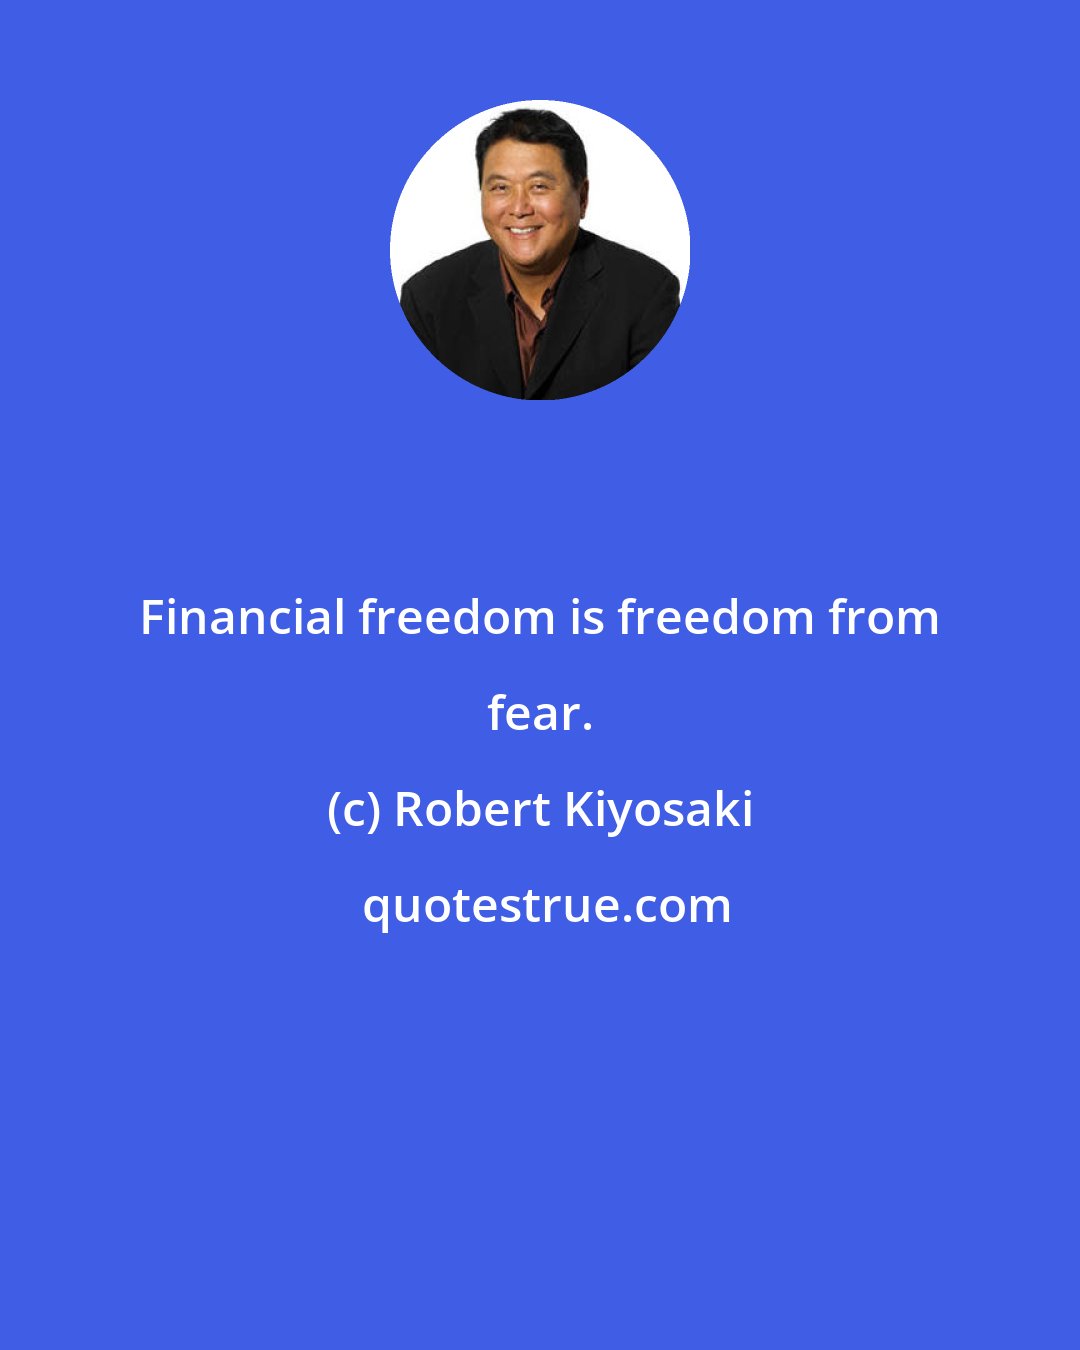 Robert Kiyosaki: Financial freedom is freedom from fear.